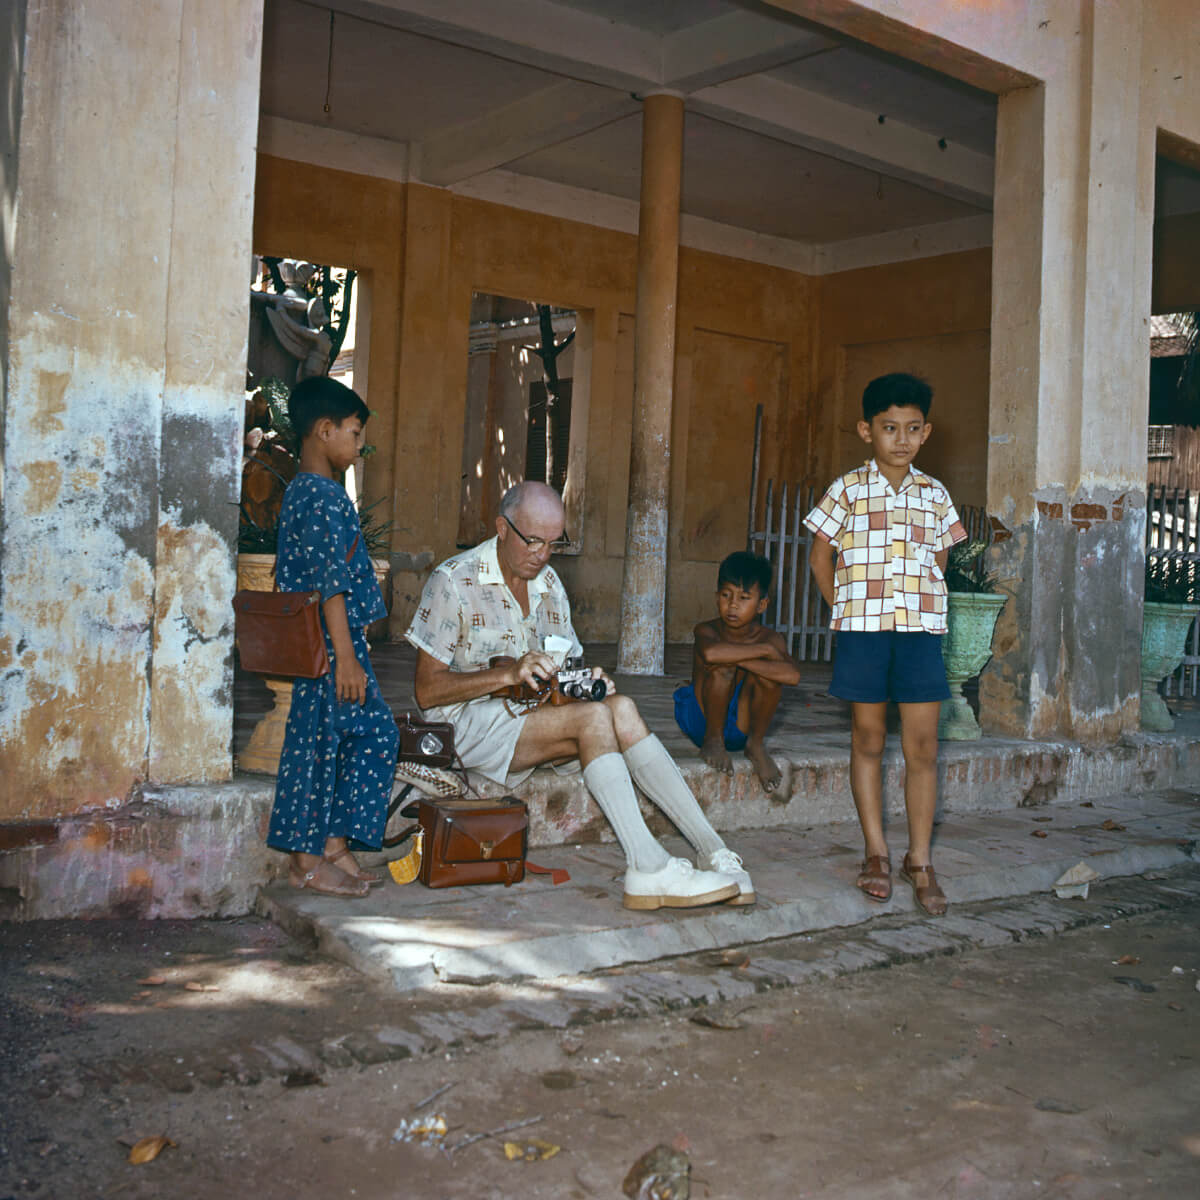 Cambodia - Siem Reap - Photographer - Saturday, September 19, 1959